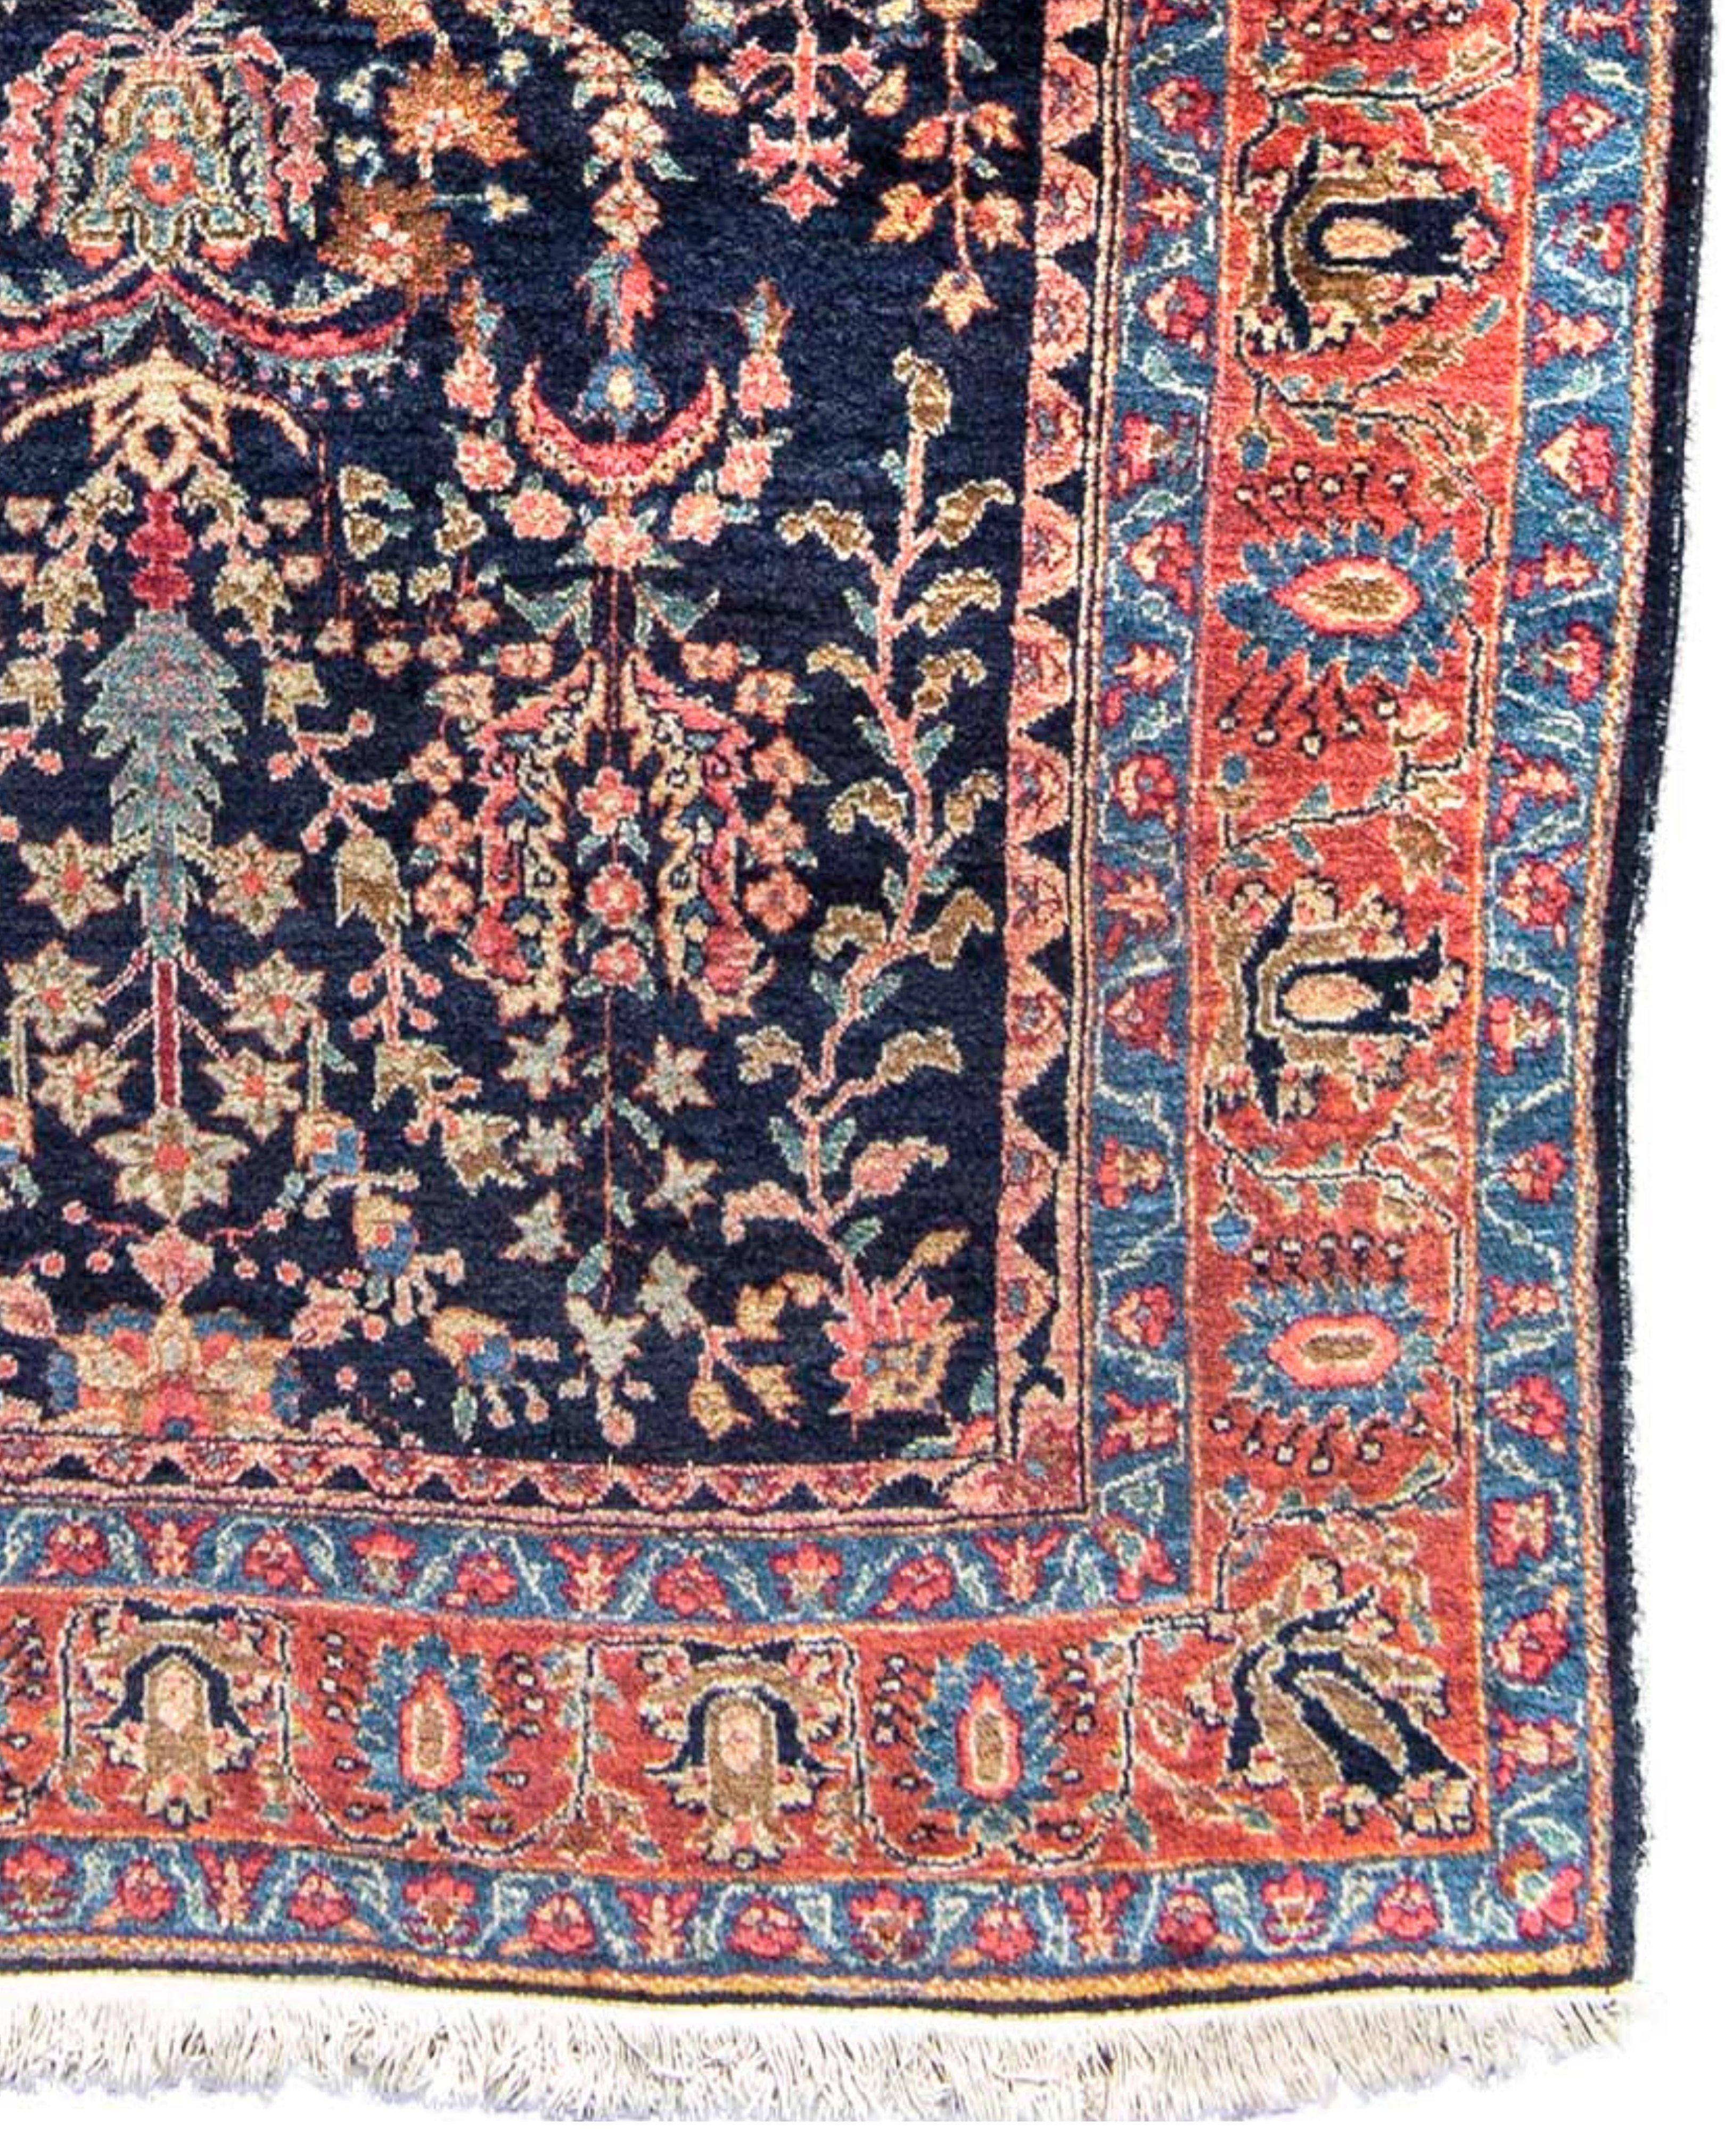 19th Century Antique Persian Fereghan Sarouk Rug, c. 1900 For Sale